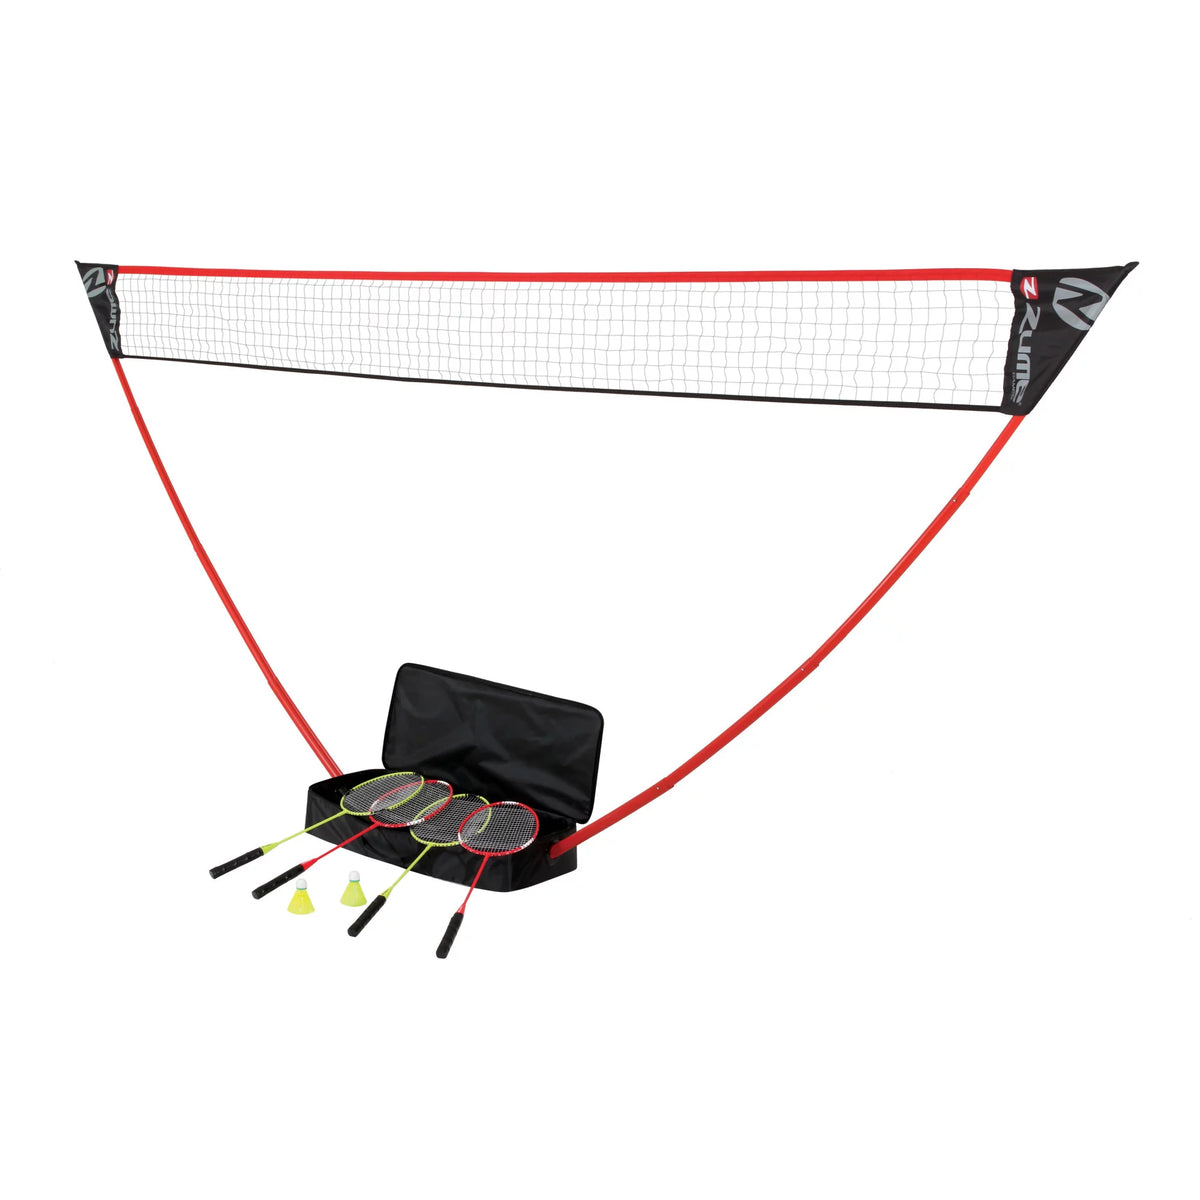 Portable Badminton Set with Freestanding Base - Instant Setup